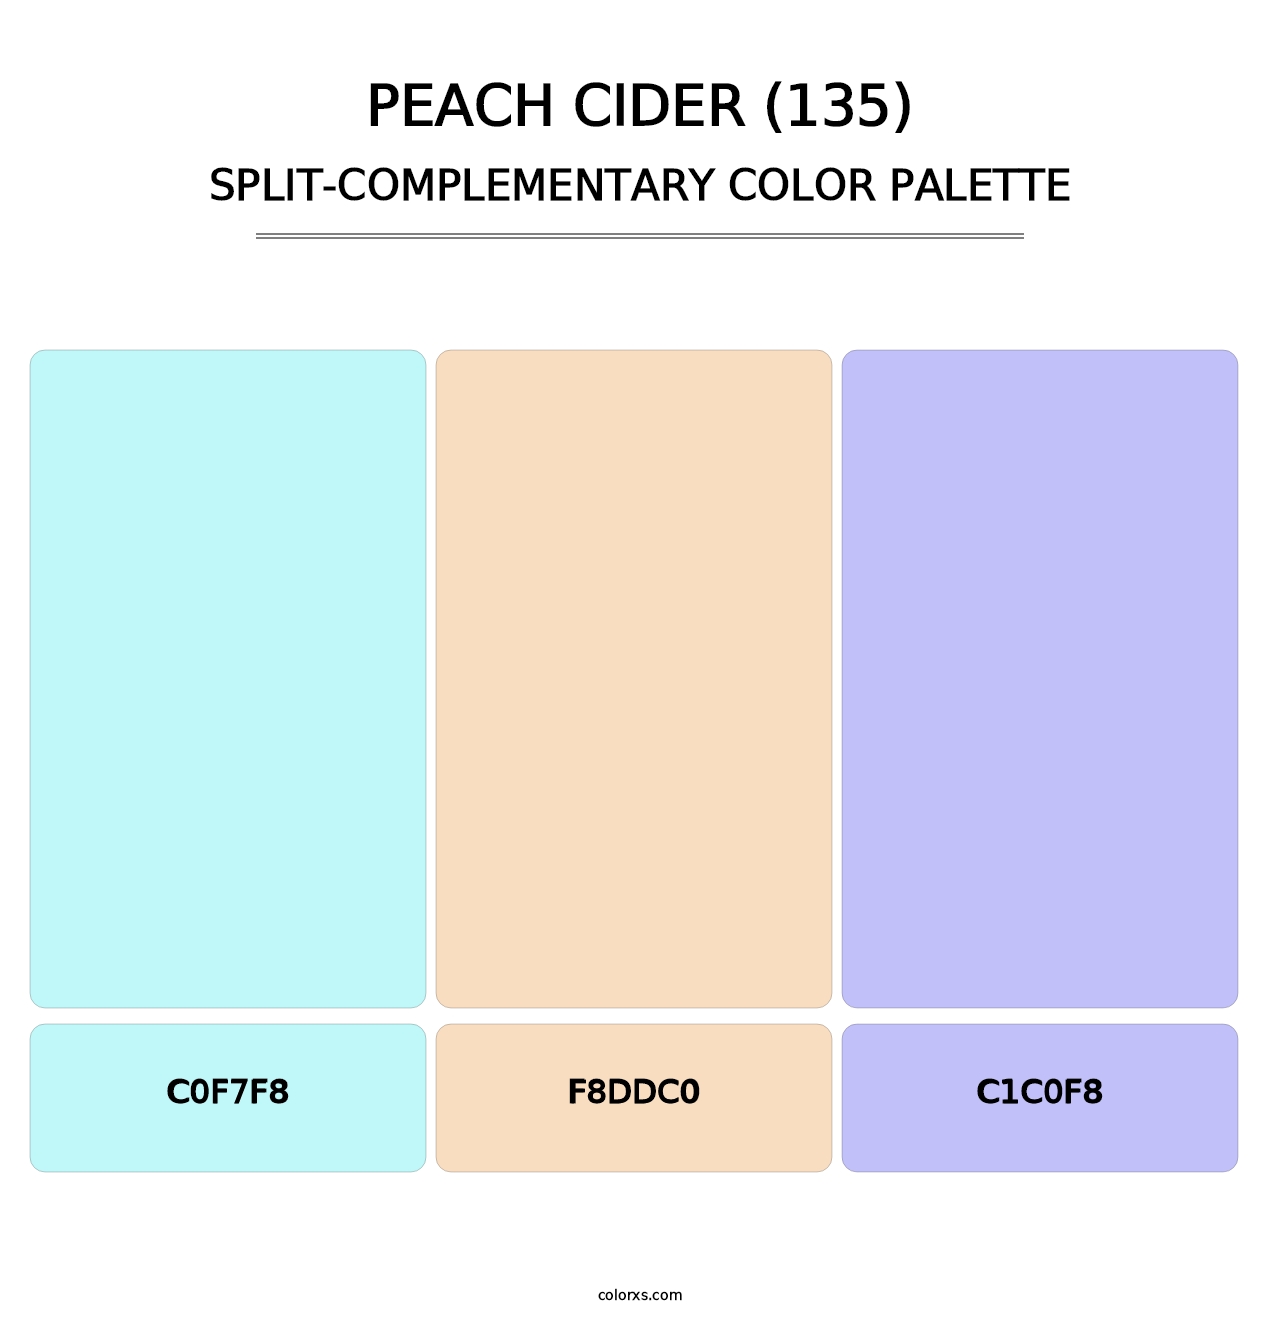 Peach Cider (135) - Split-Complementary Color Palette